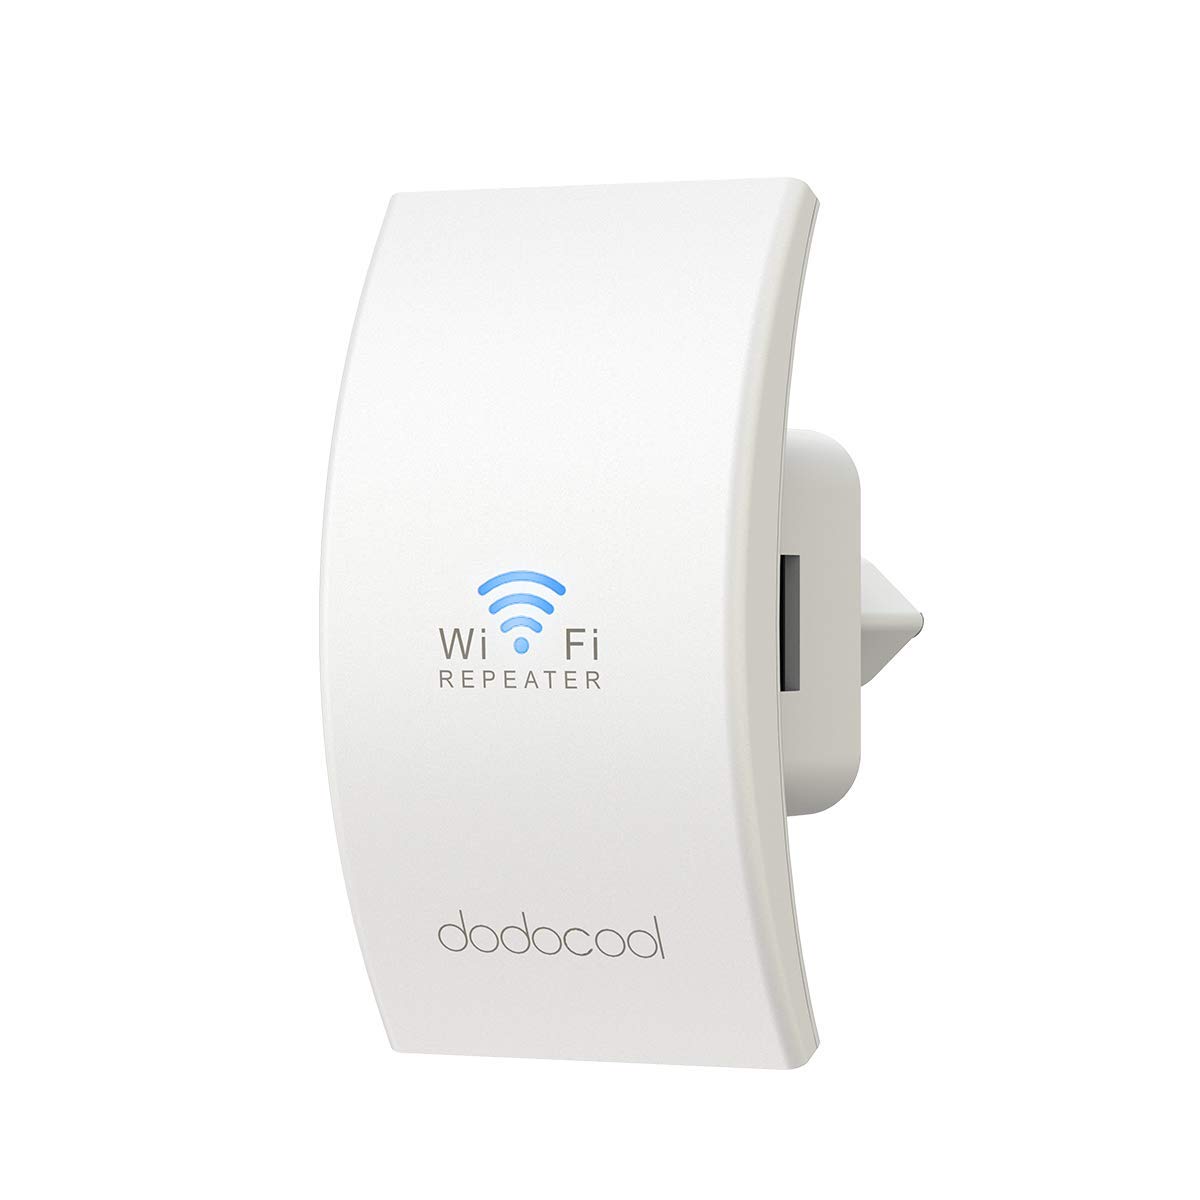 Repetidor WiFi dodocool N300 2.4GHz 300Mbps 802.11n/b/g con 2 Antenas Integradas